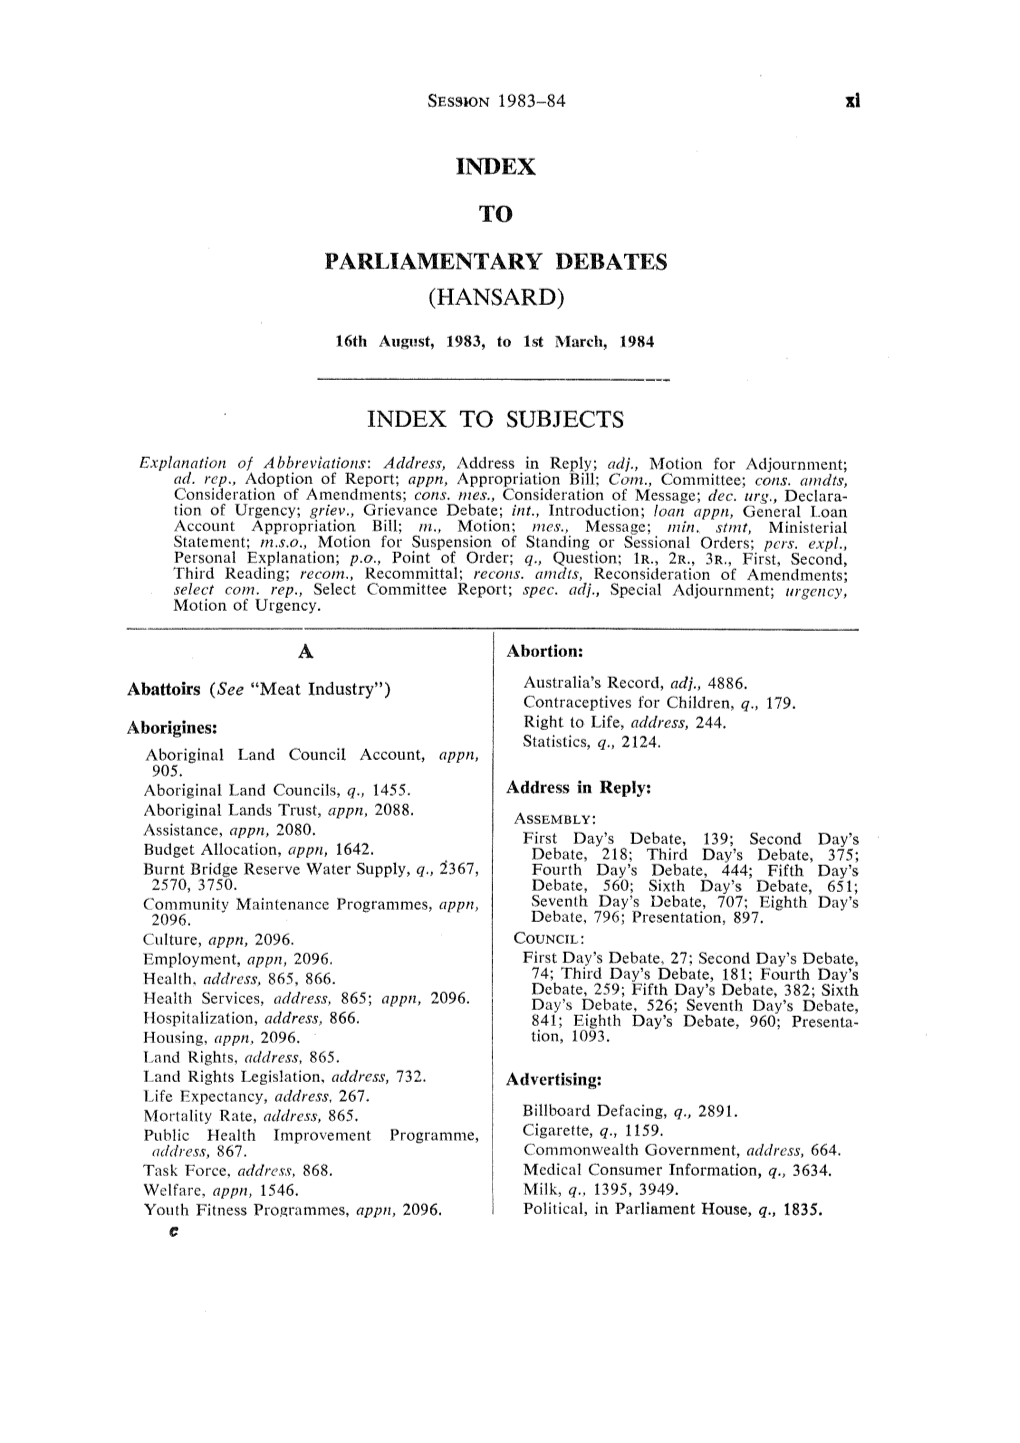 Index to Parliamentary Debates (Hansard)